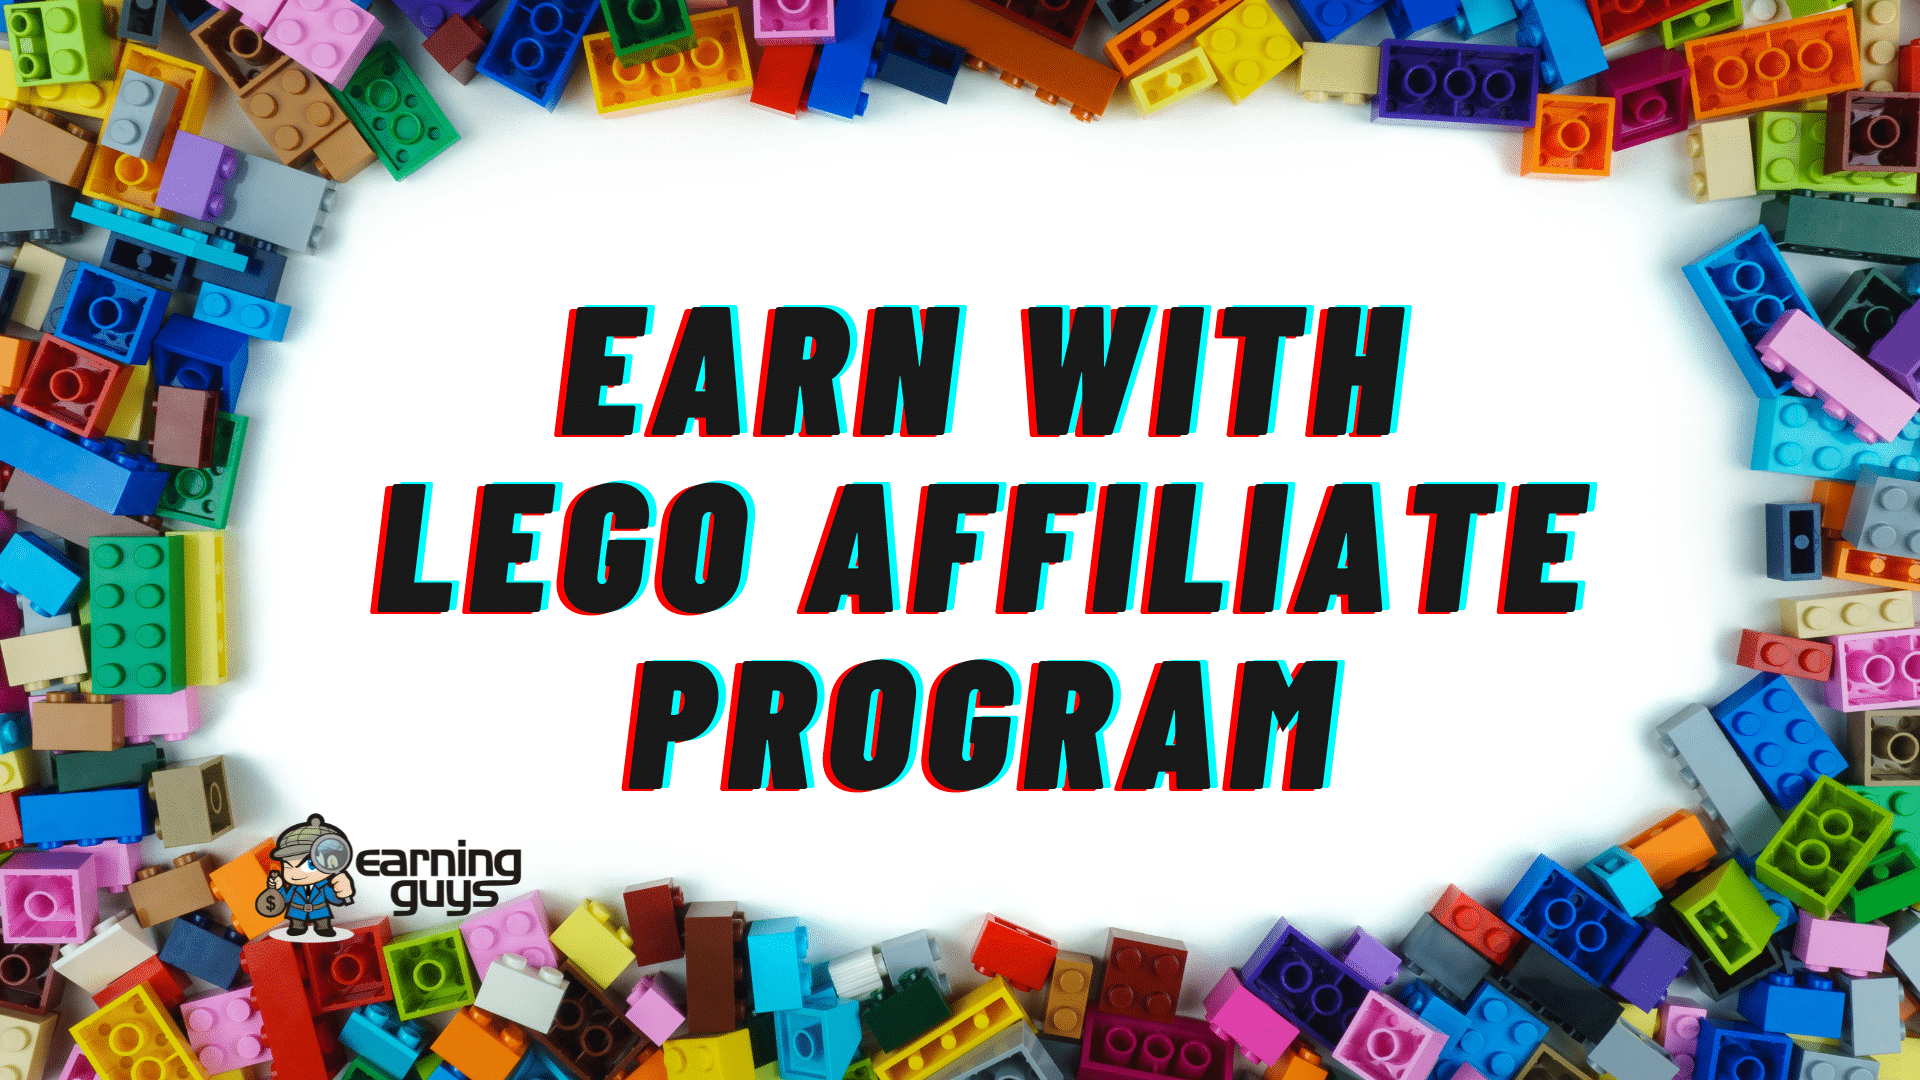 Lego Affiliate Program